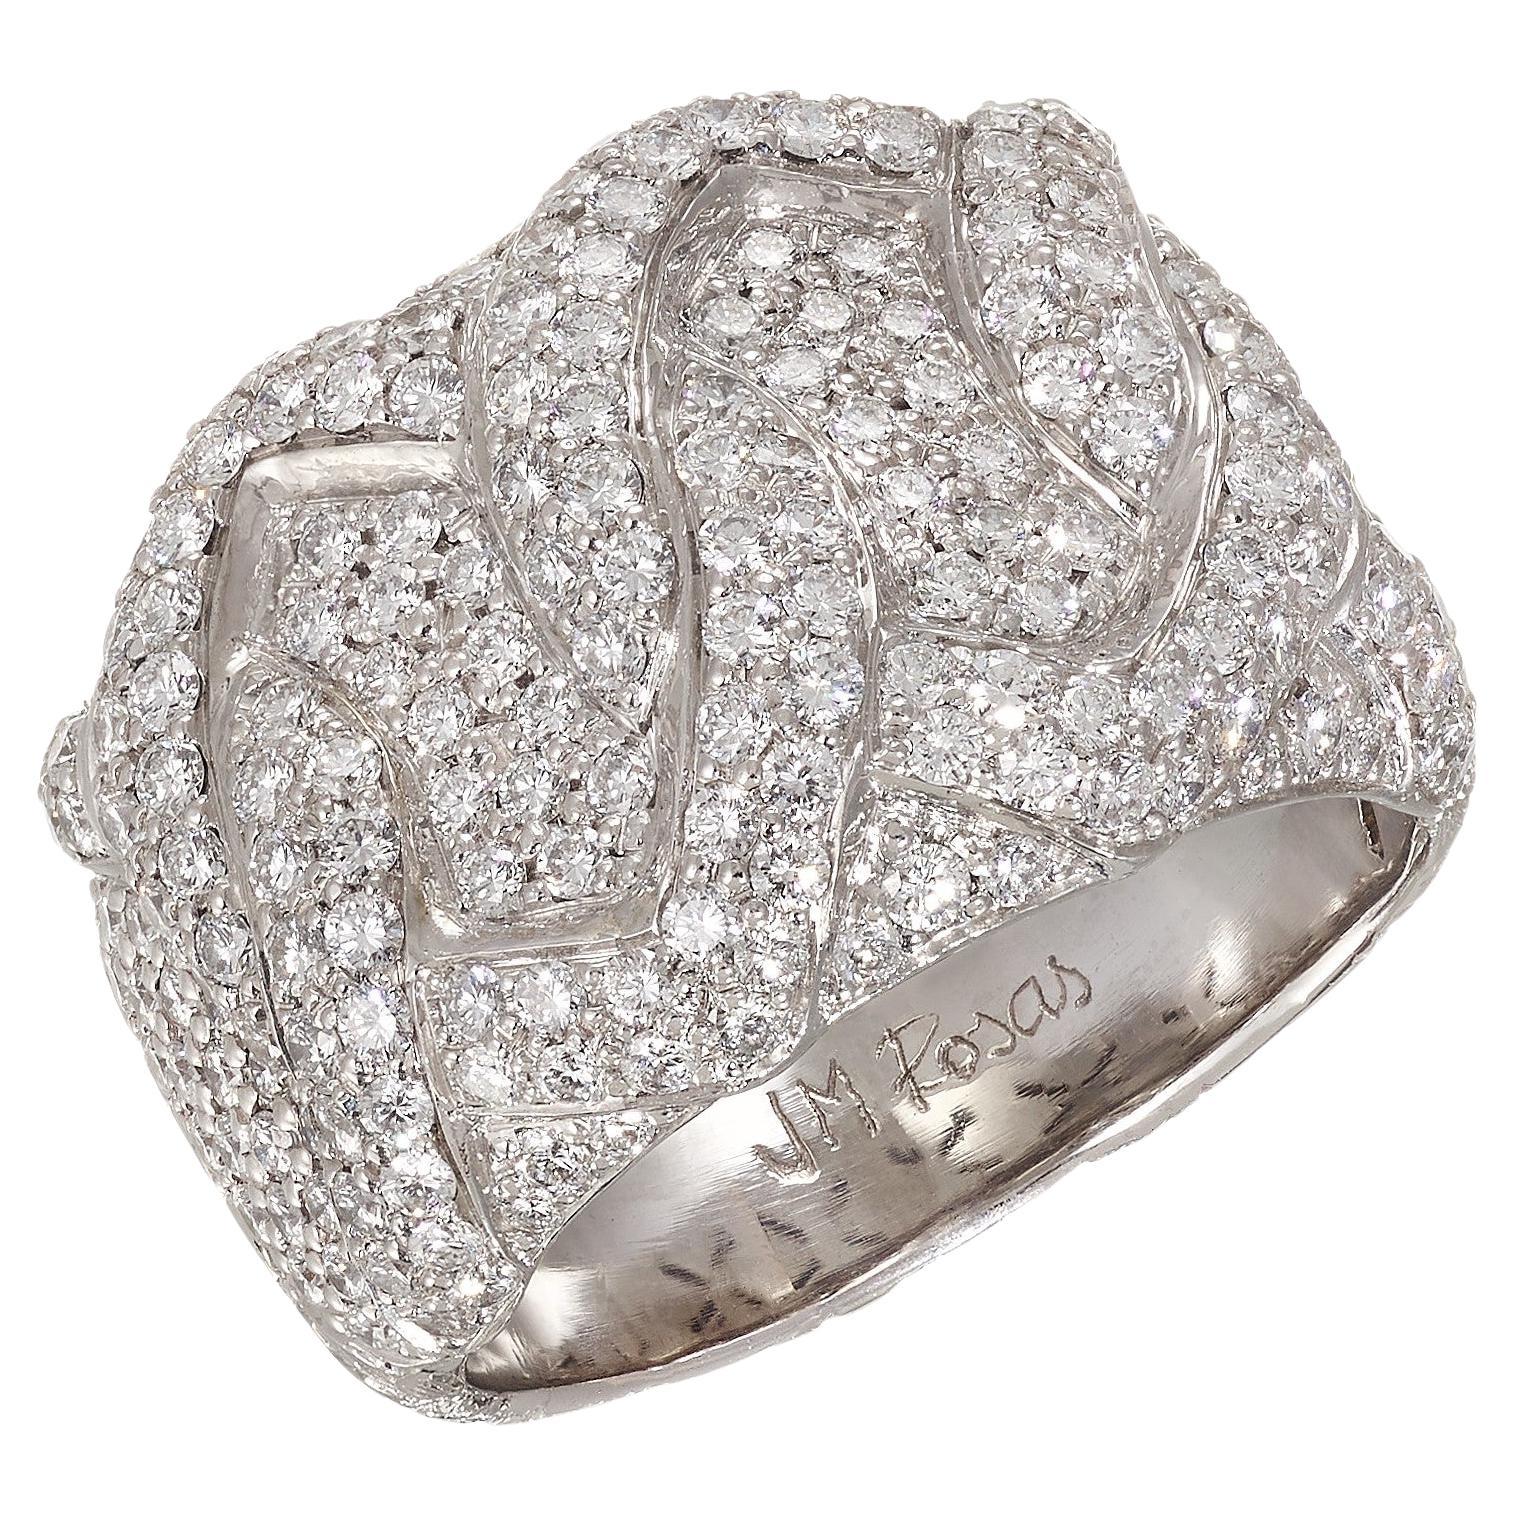 Signed "JMRosas" Rosior Diamond Ring set in Platinum